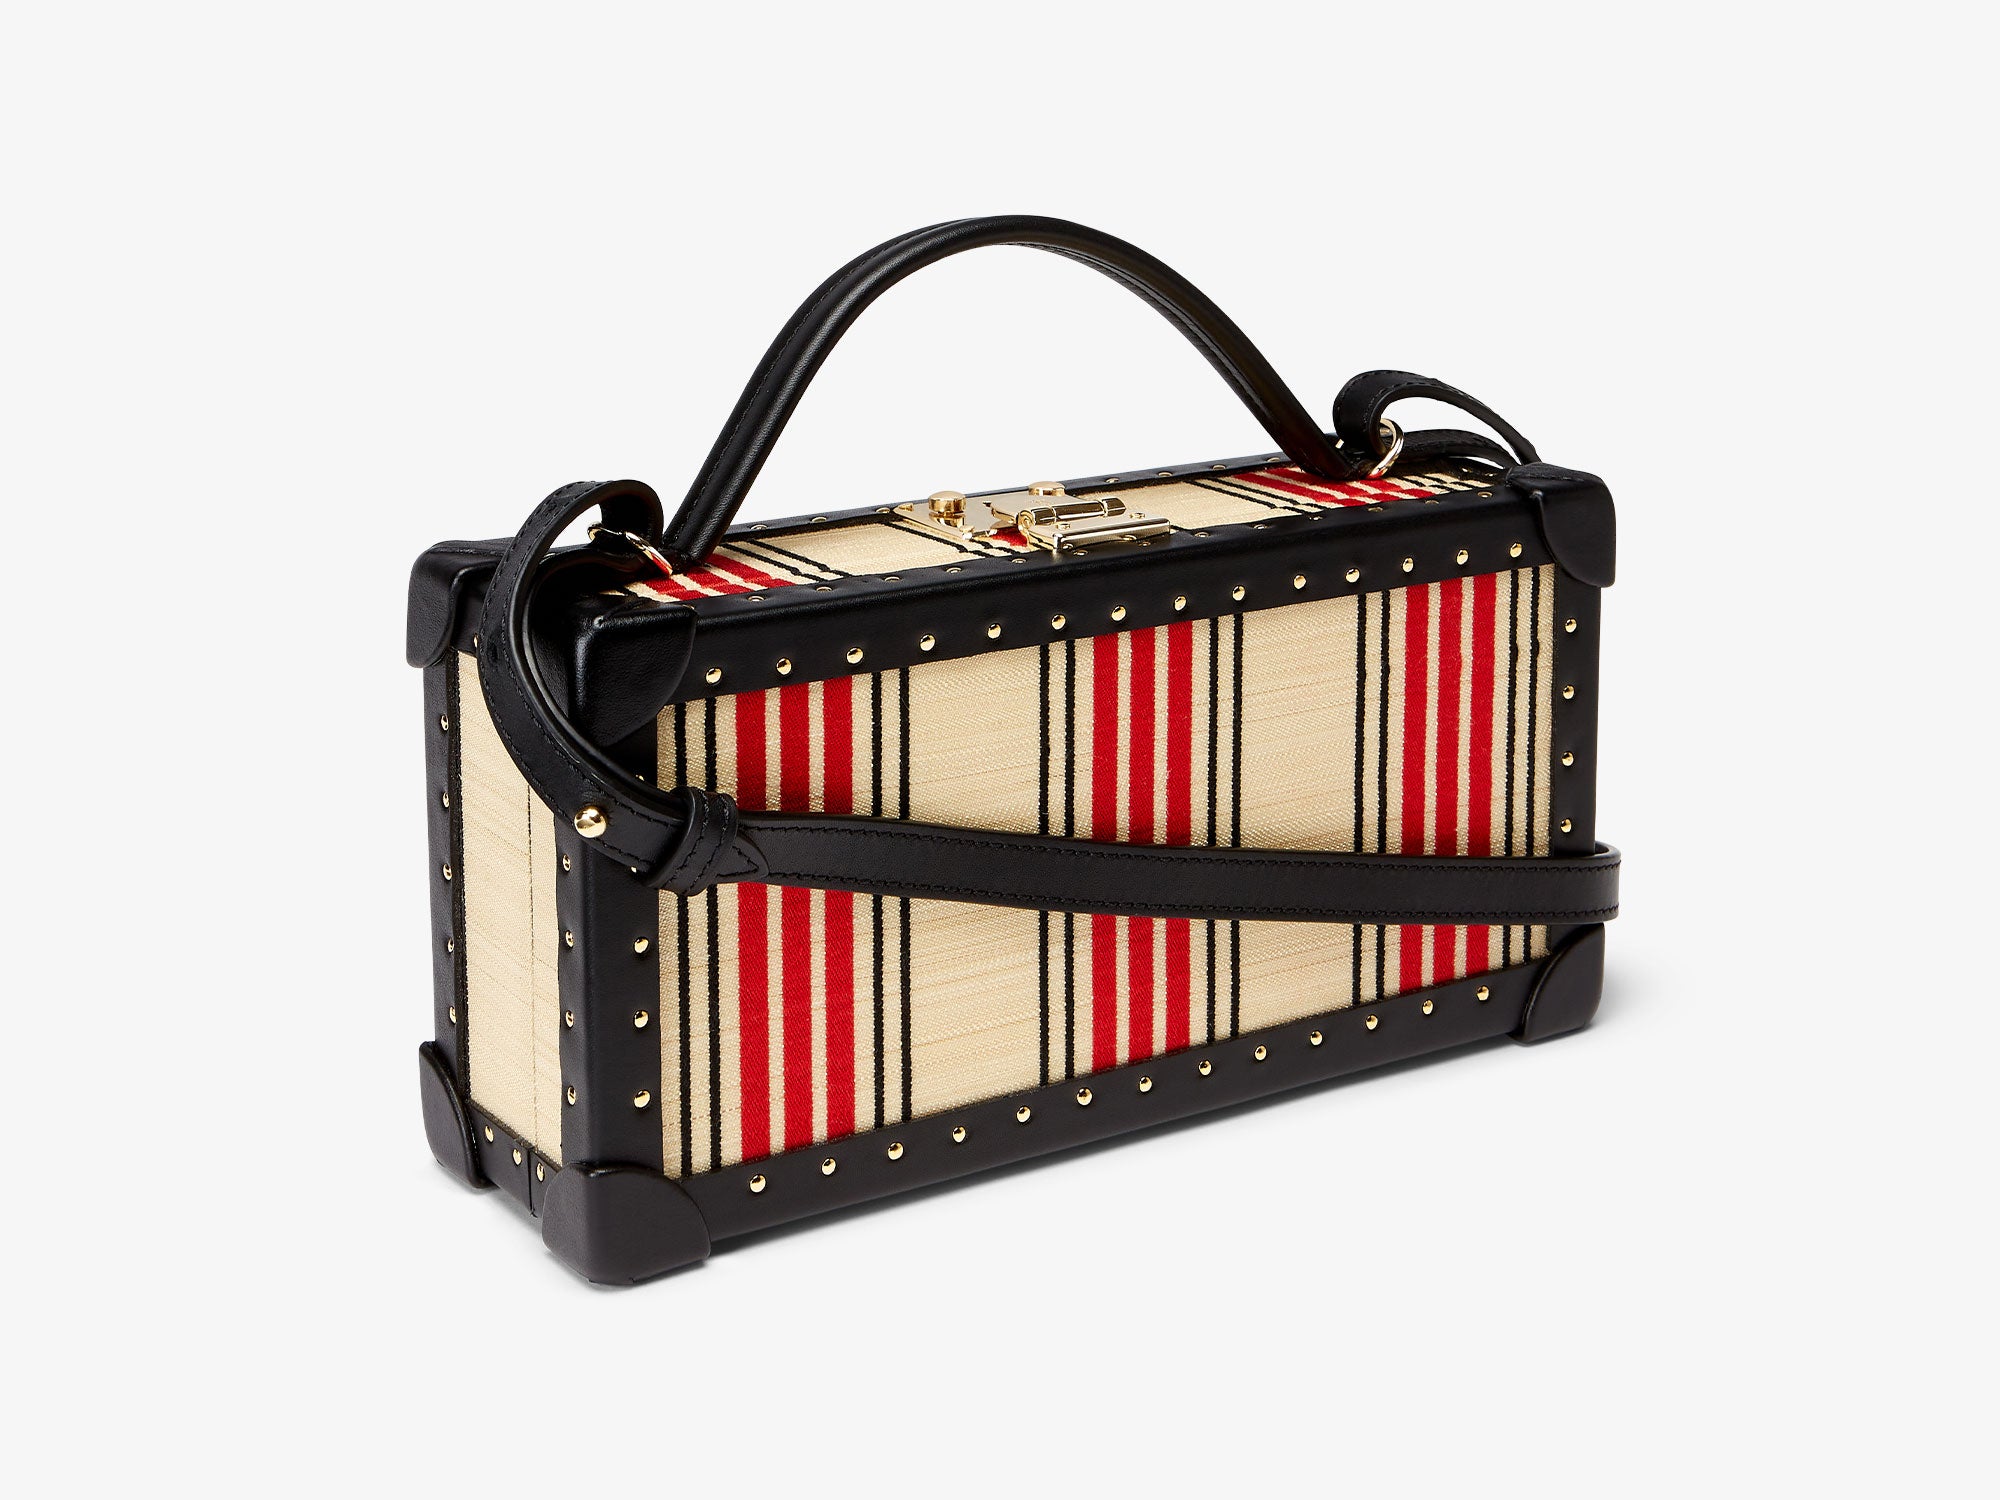 Buy online Lv Handbag Long Strap With Box In Pakistan